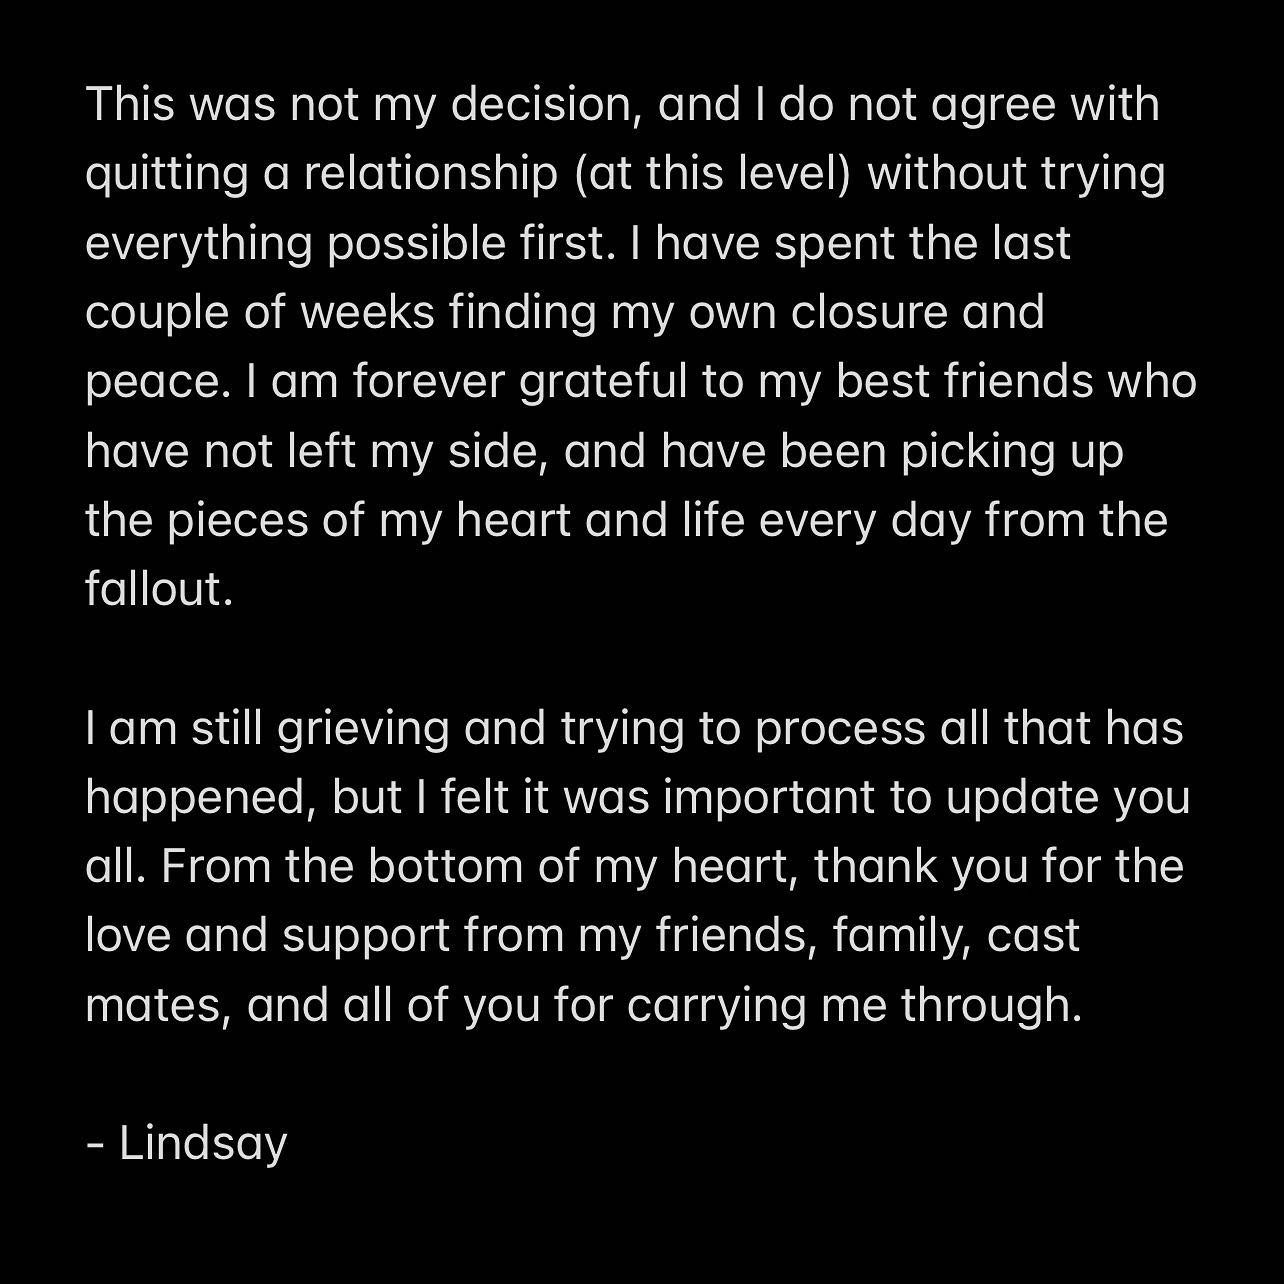 Lindsay Hubbard's first statement